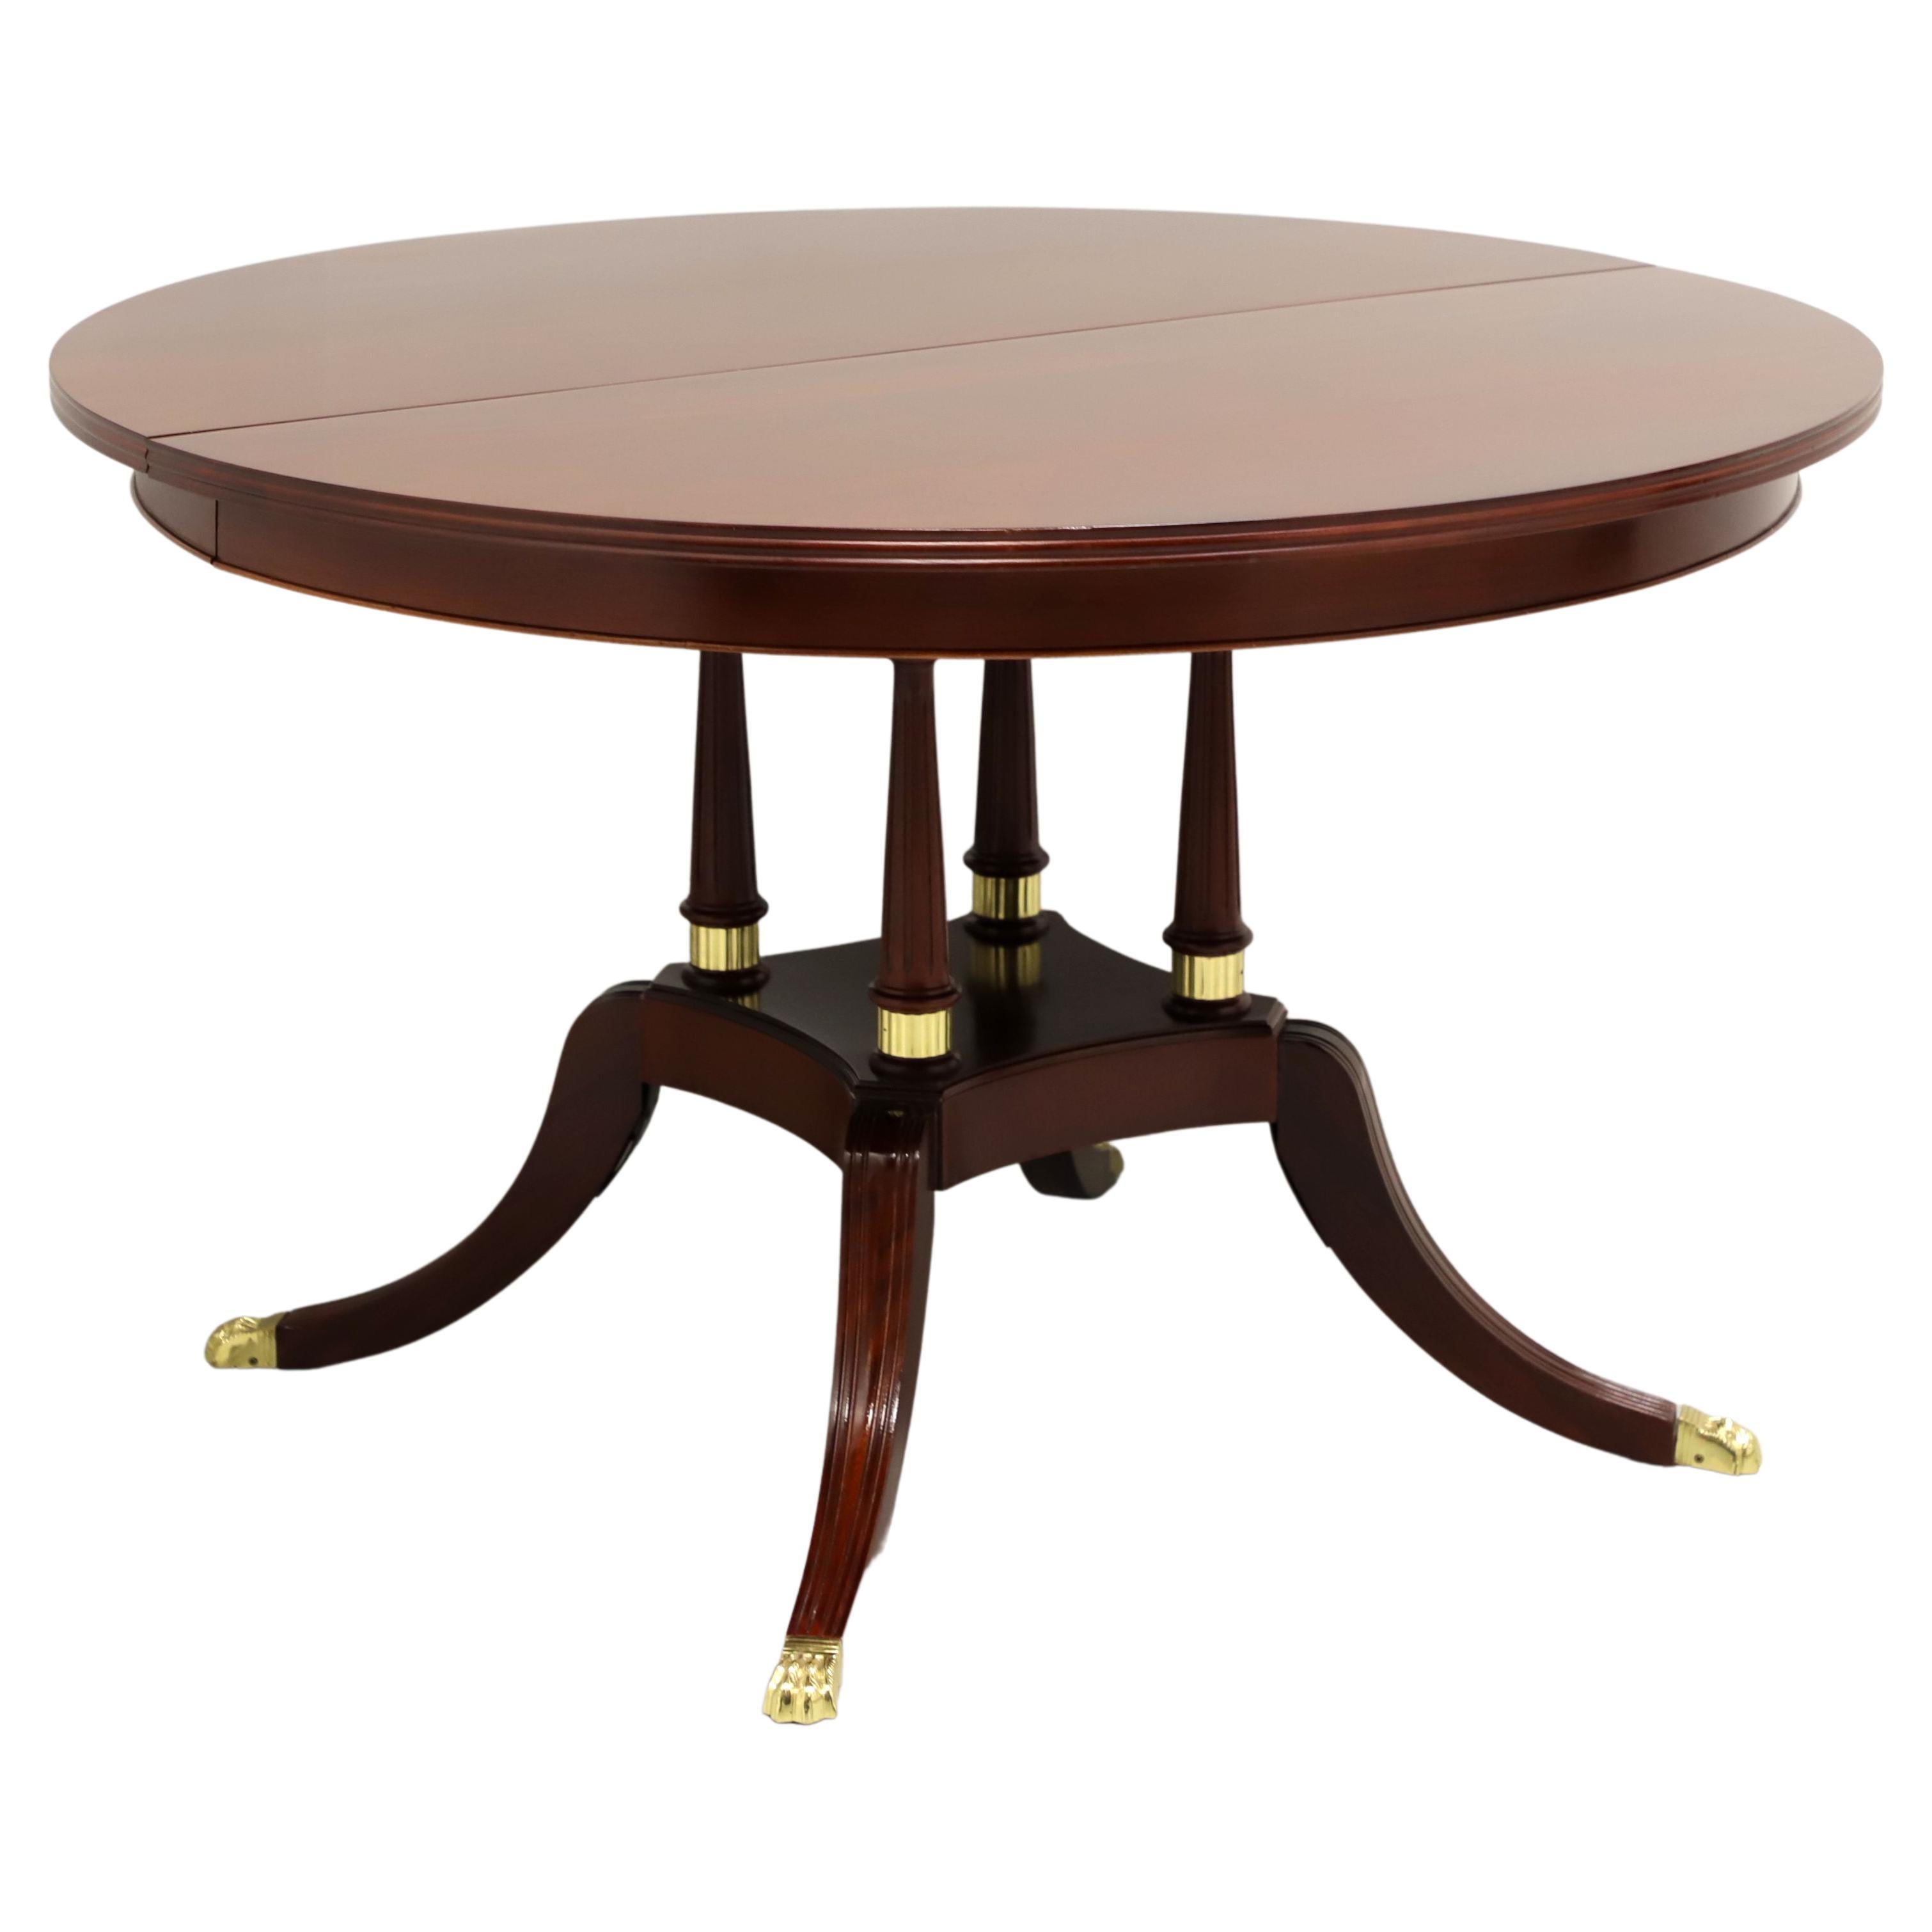 CRAFTIQUE Solid Mahogany Regency 48" Round Single Pedestal Dining Table